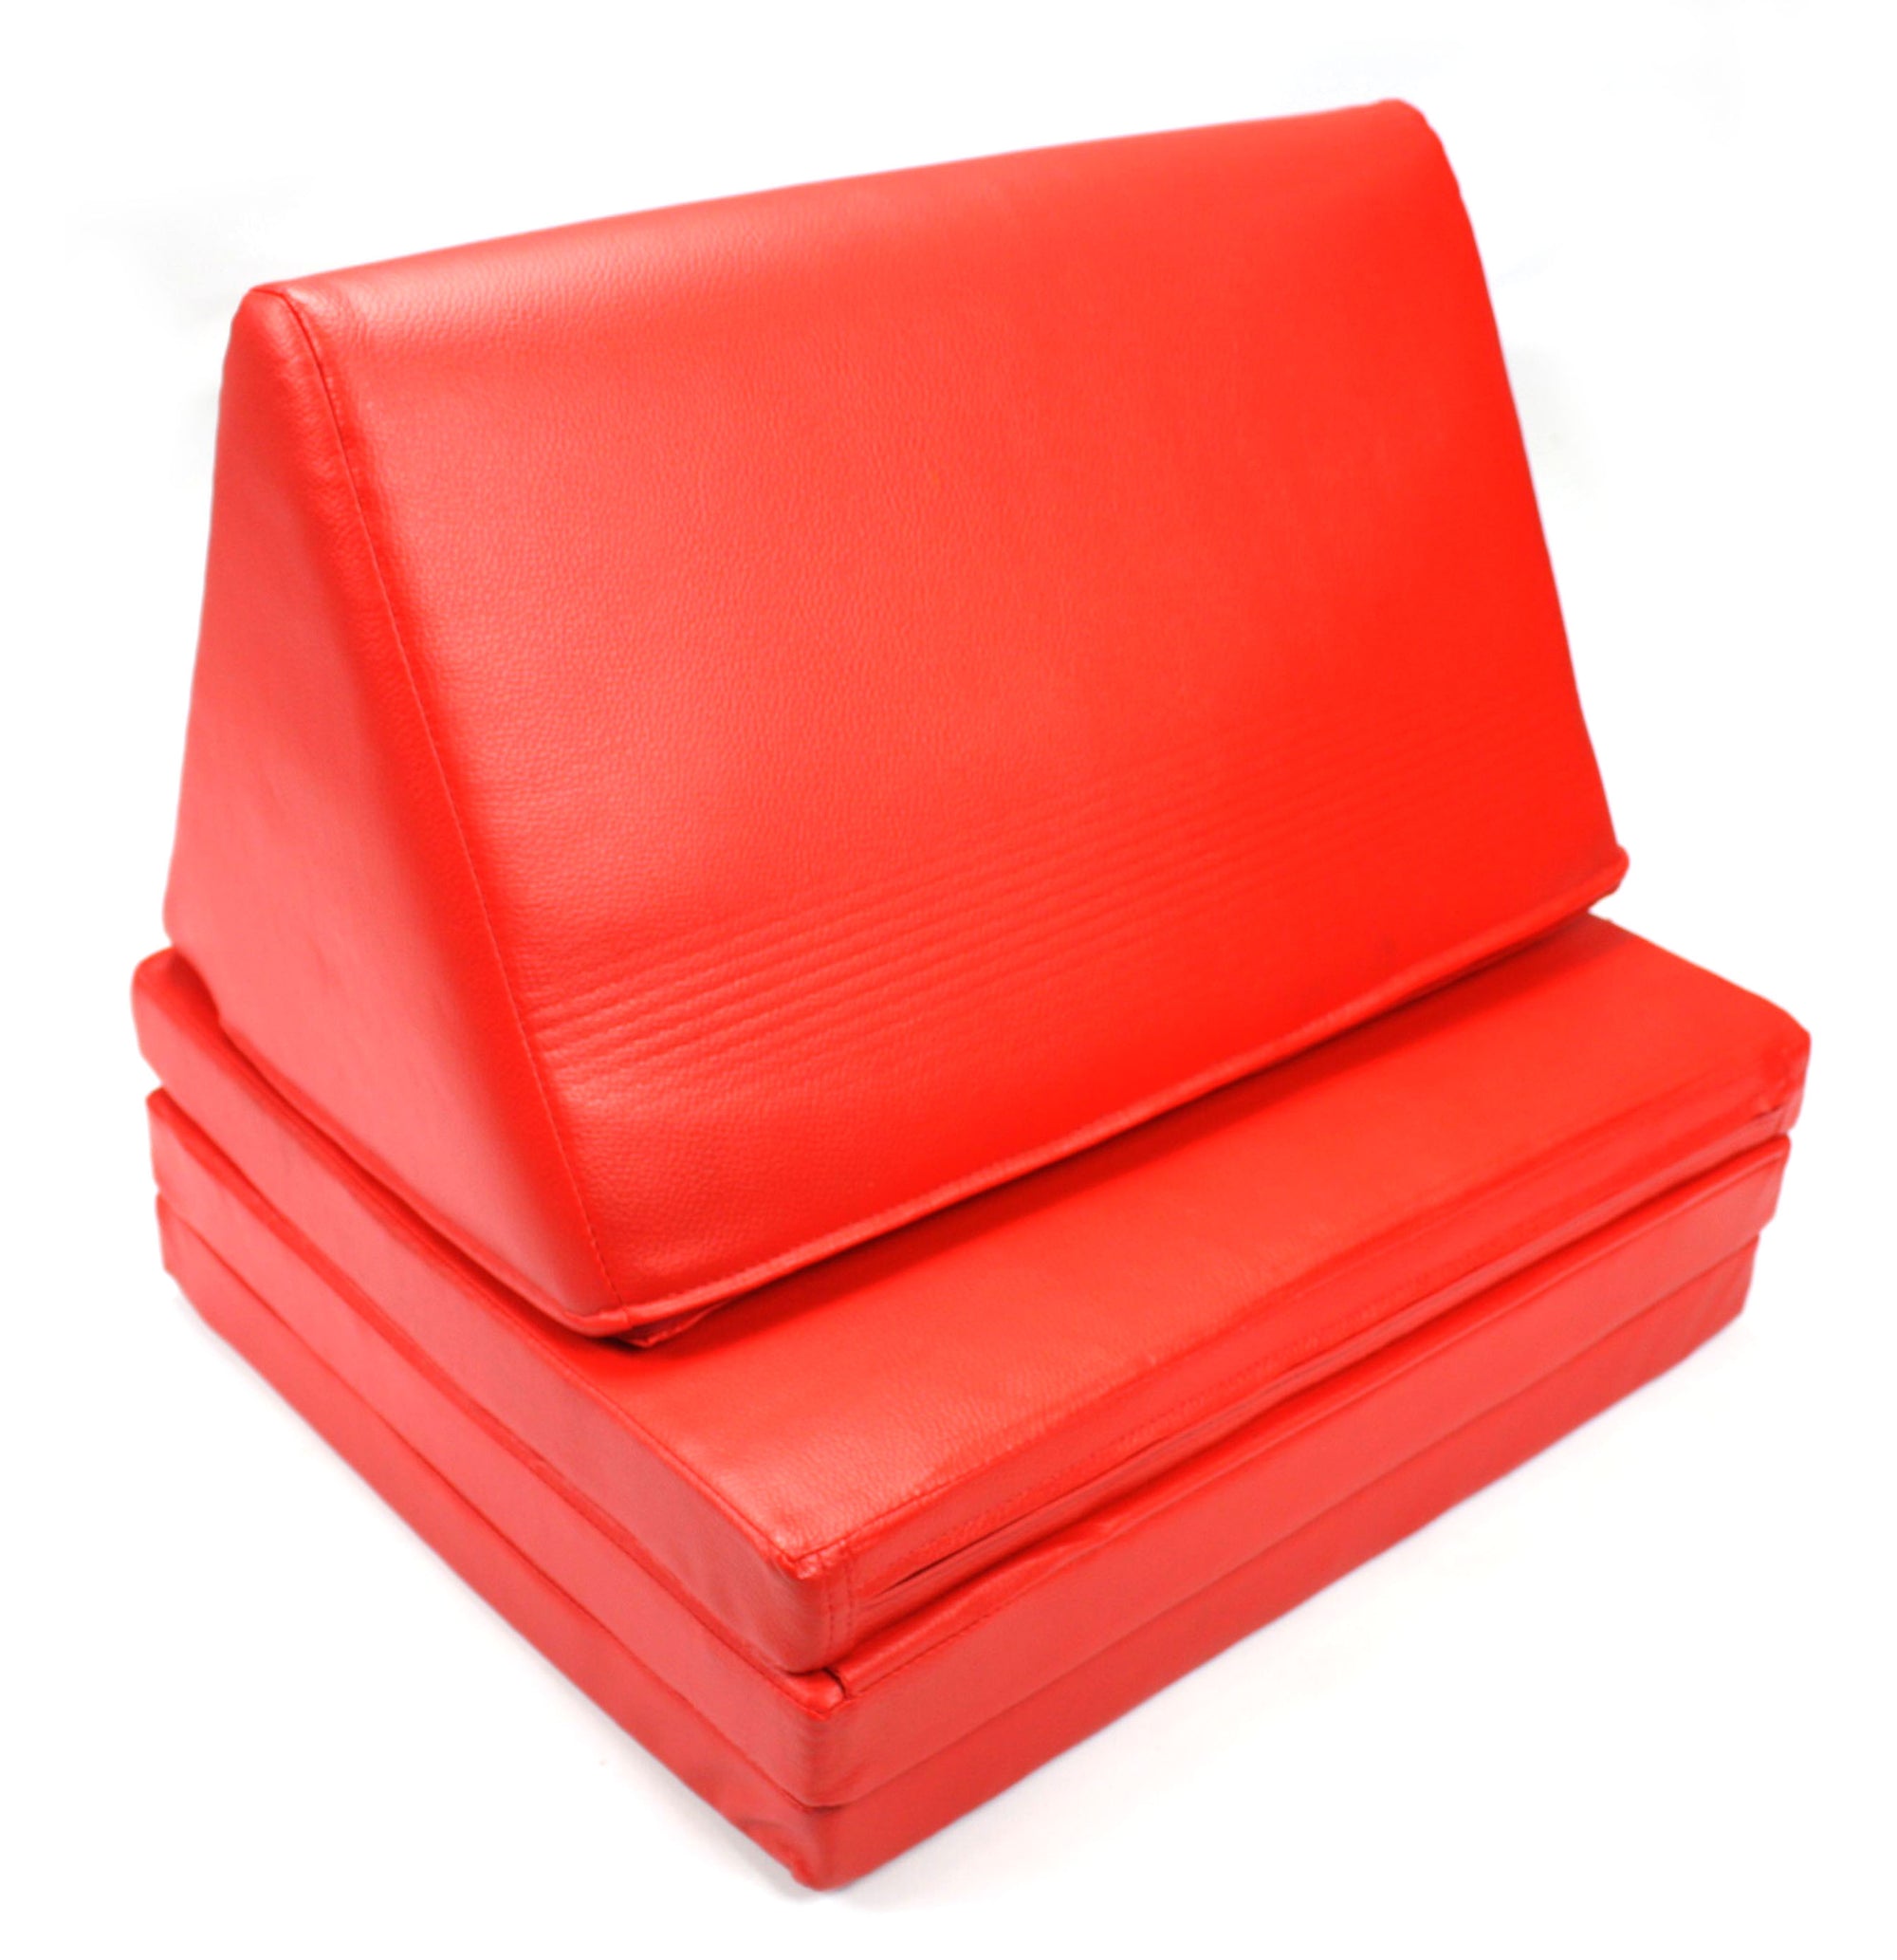 Waterproof Red Vinyl three fold Thai Cushion - farangshop-co